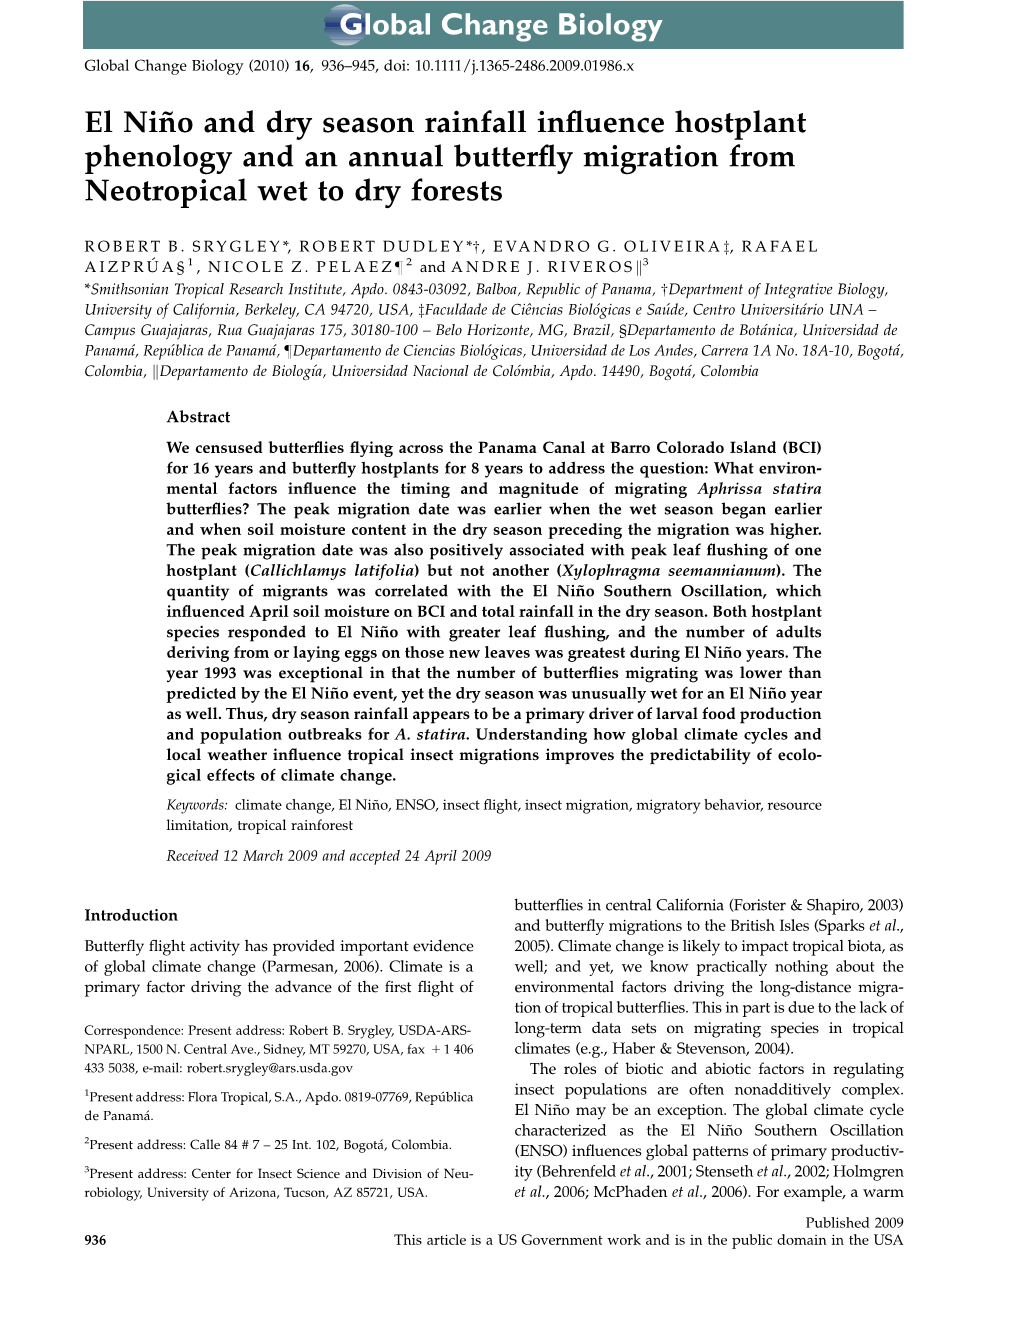 El Nin˜O and Dry Season Rainfall Influence Hostplant Phenology And